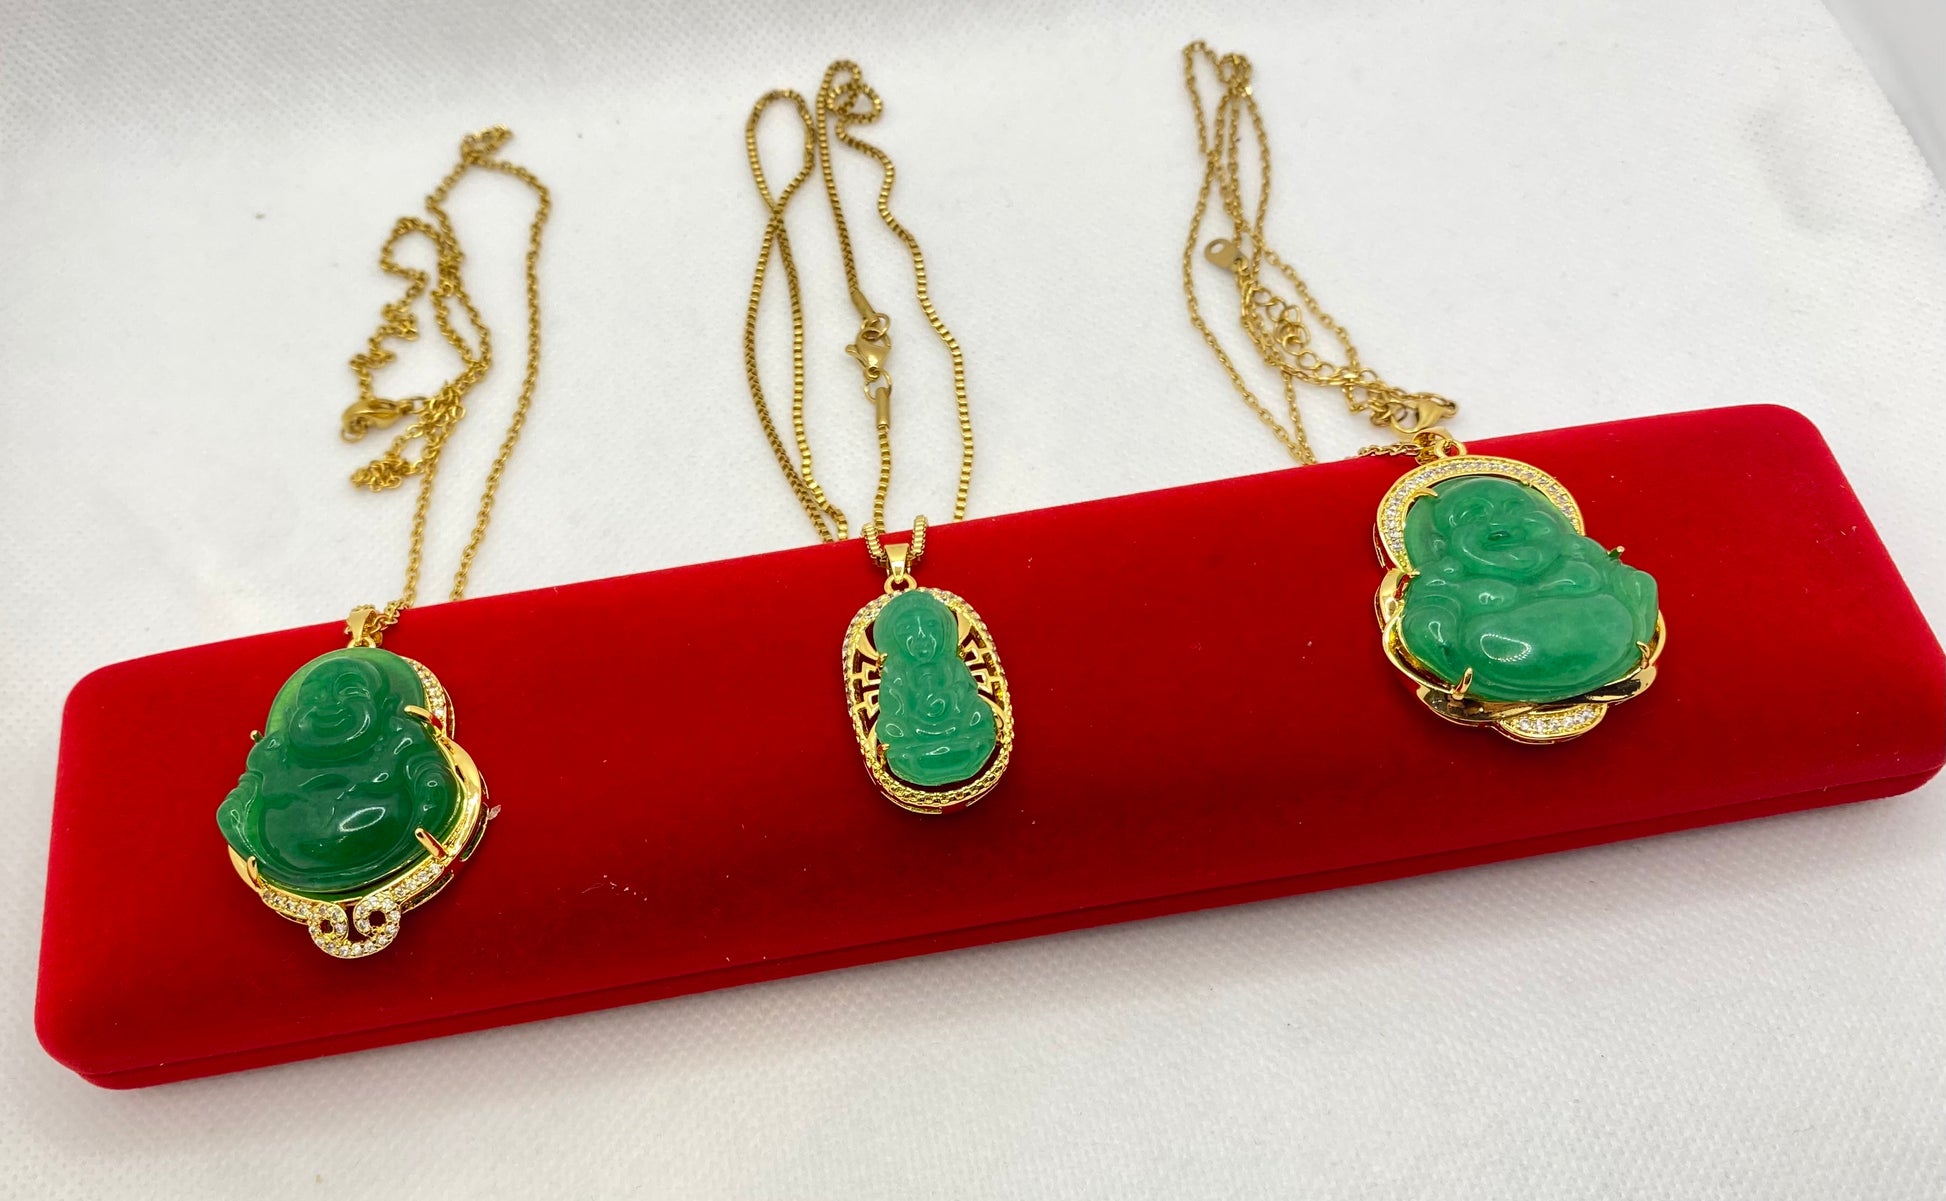 Jade happy Buddha pendant, Buddha pendant, jade – Churk Work Shop